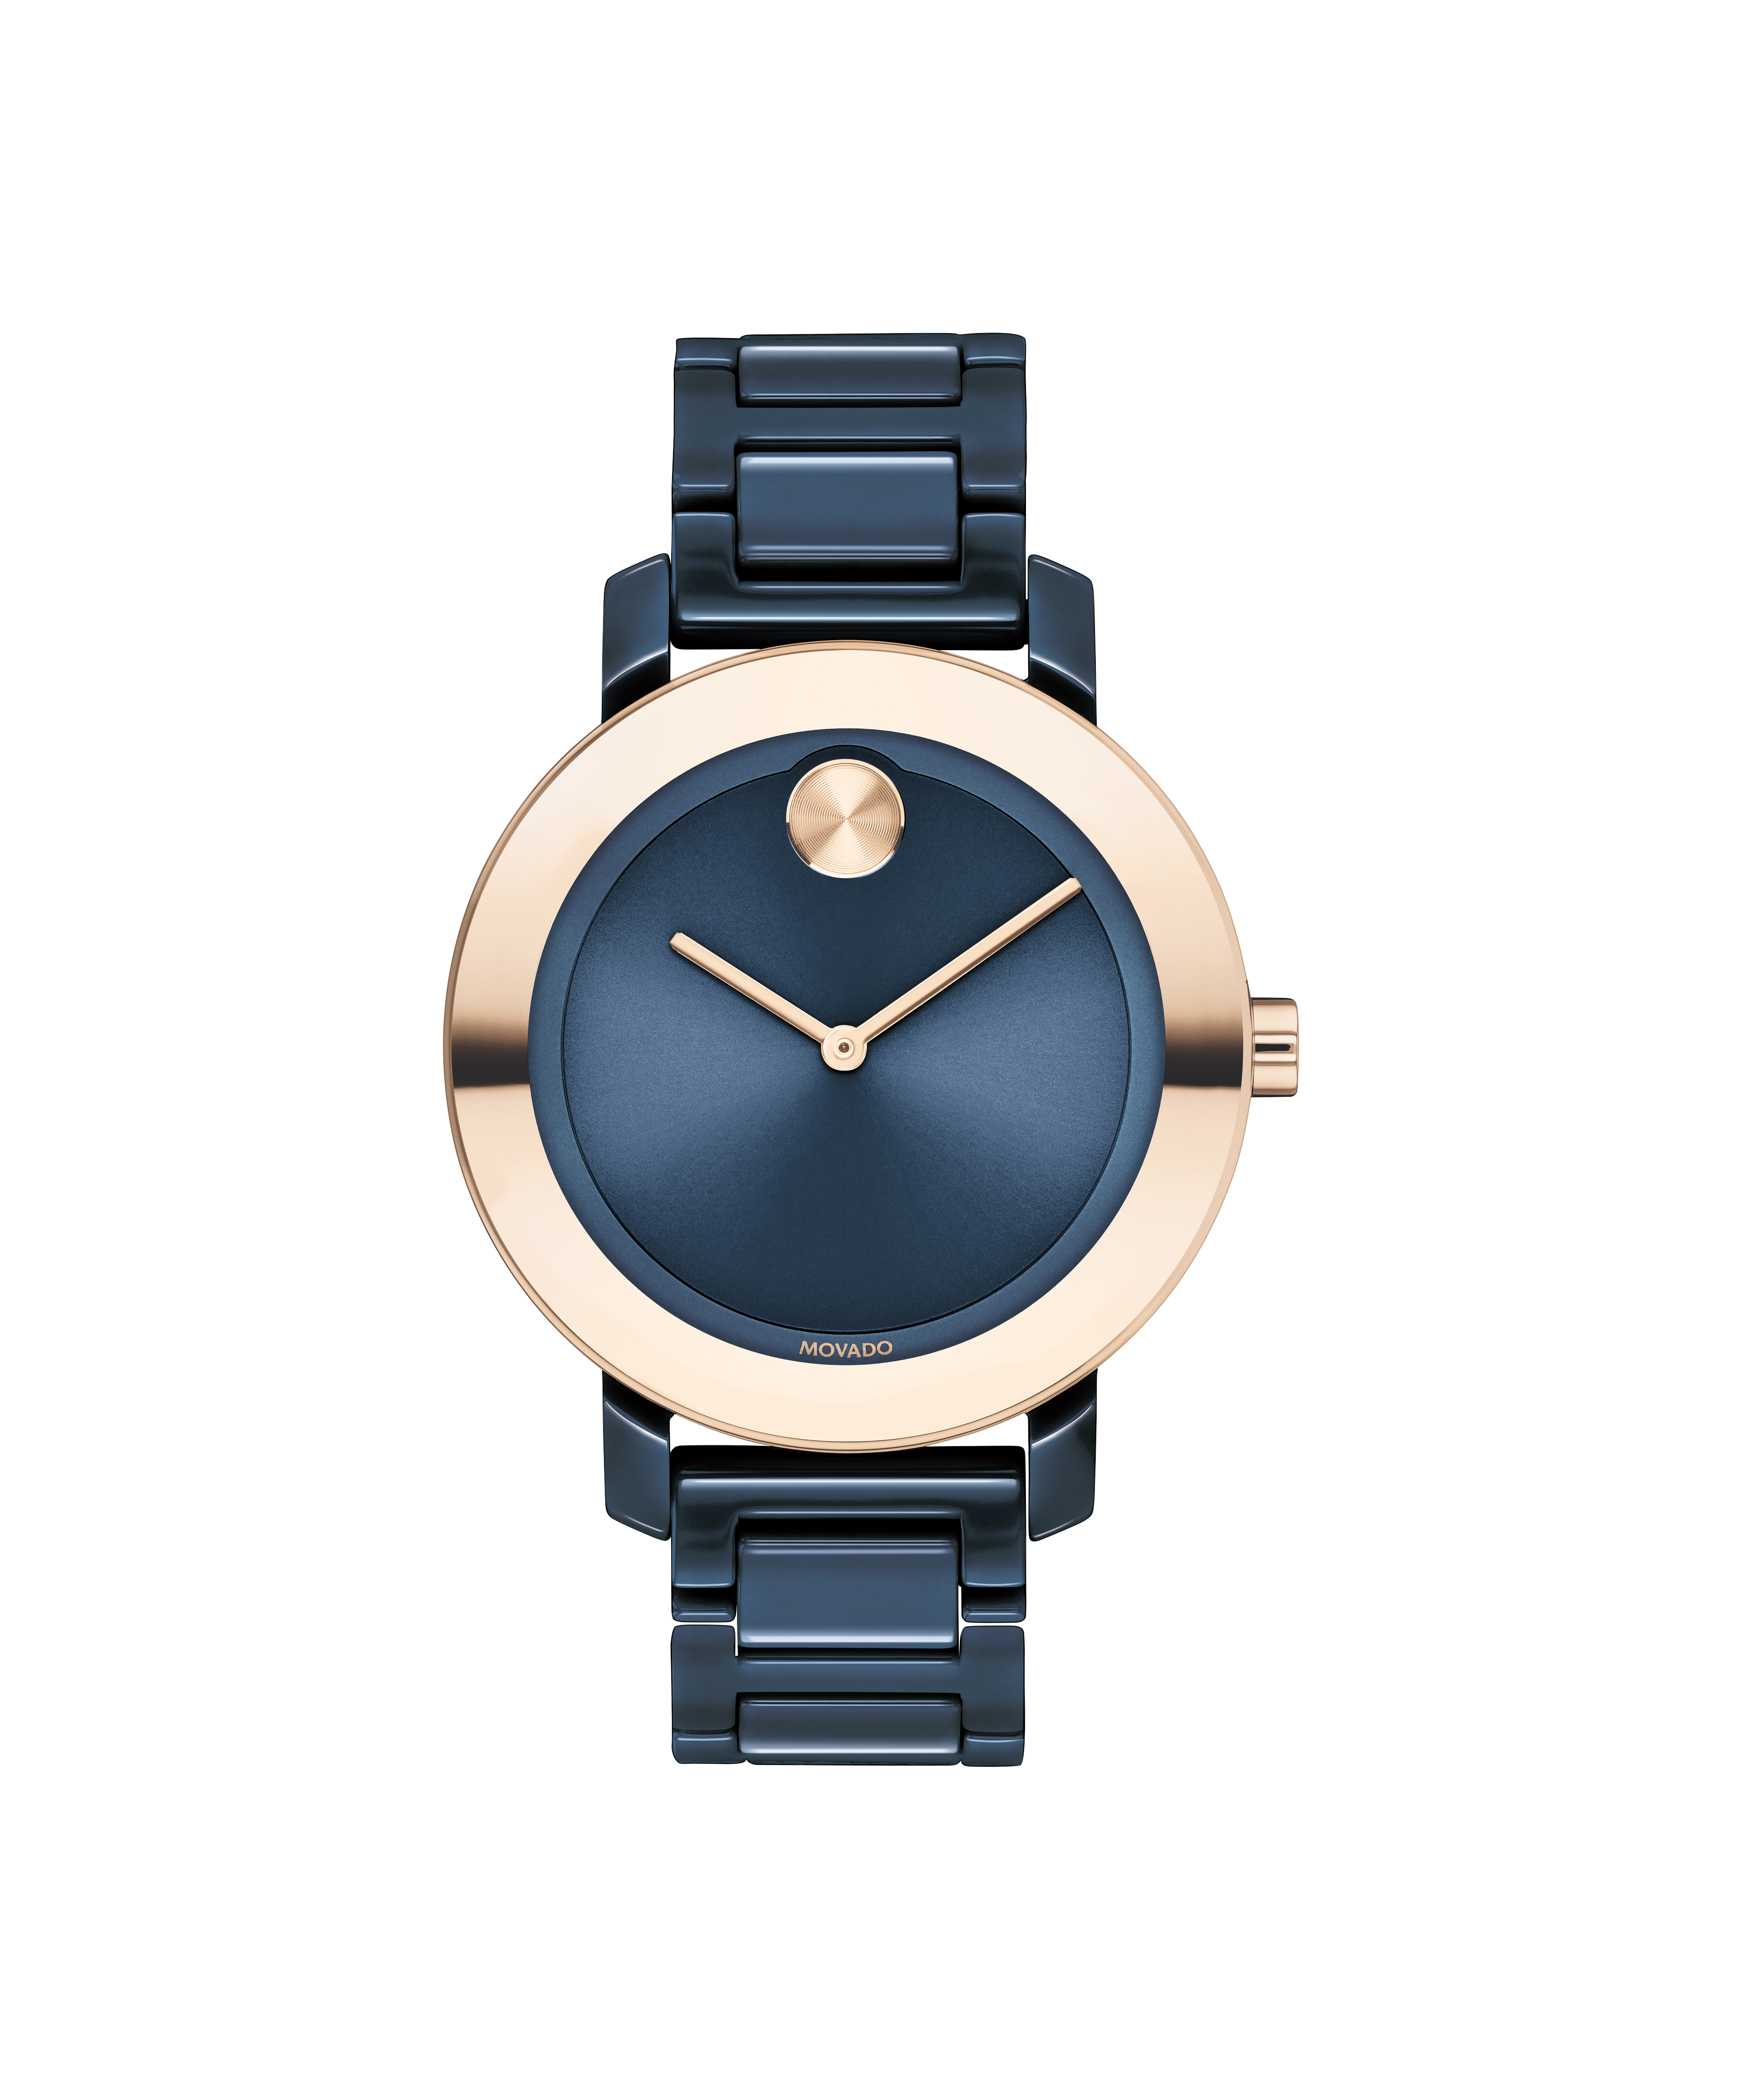 Movado Men's BOLD Date 42mm Blue Watch 3600459Movado 1881 chronograph gold